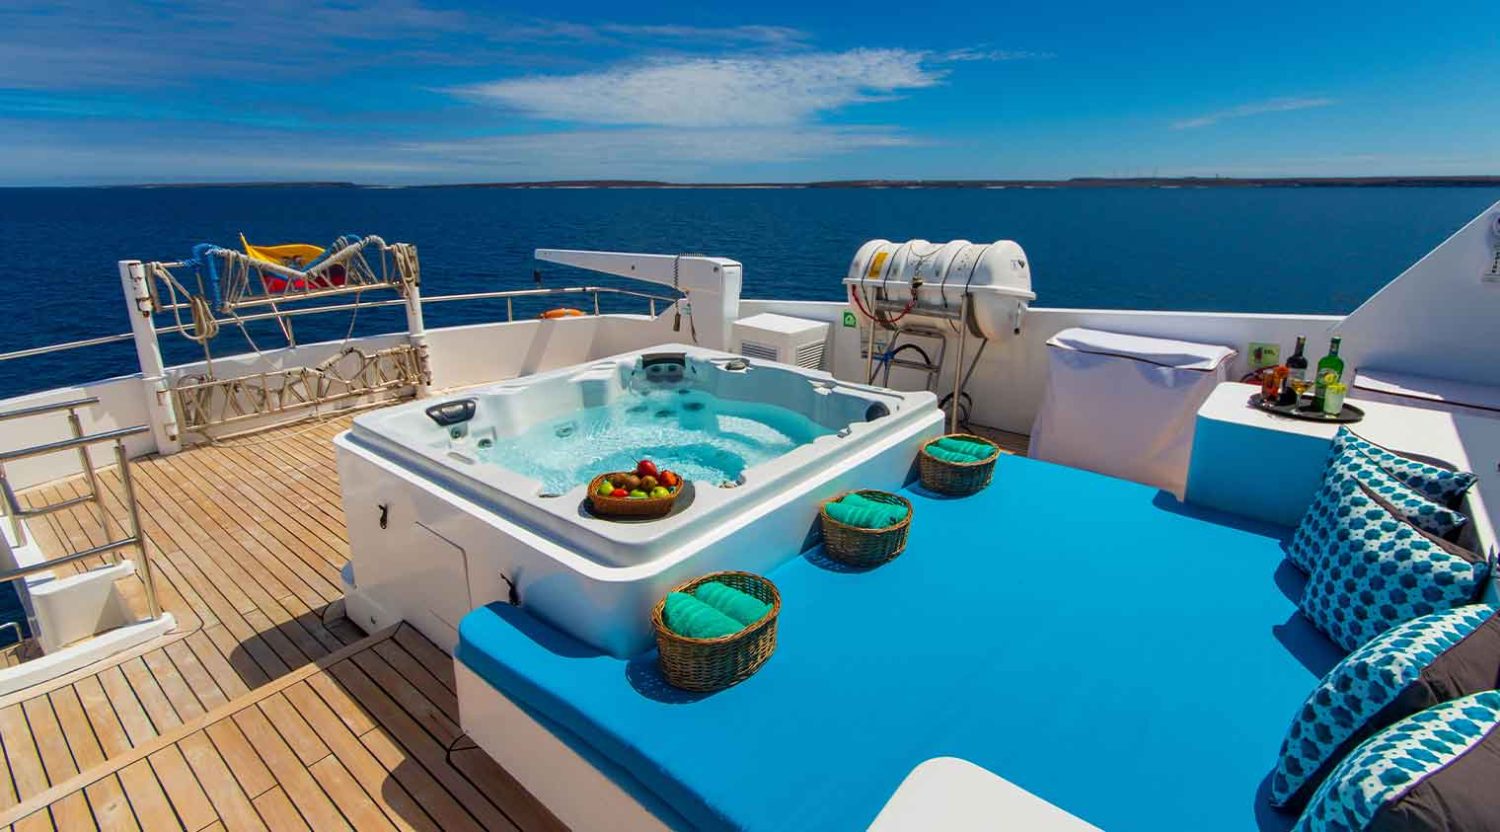 grand majestic galapagos yacht hot tub of galapagos islands tours